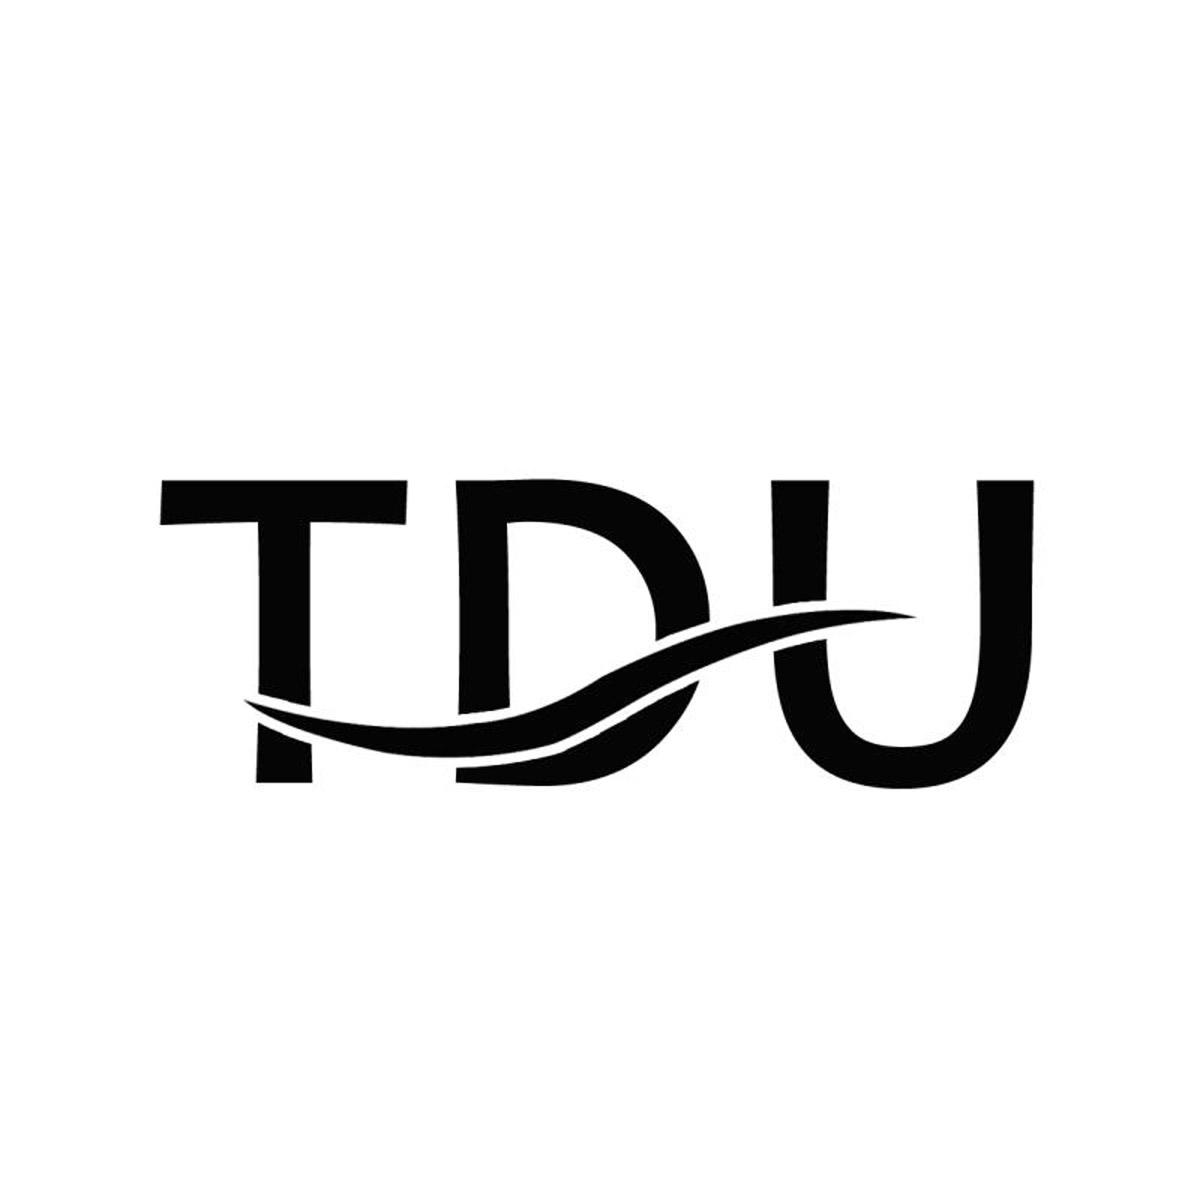 TDU照片商标转让费用买卖交易流程